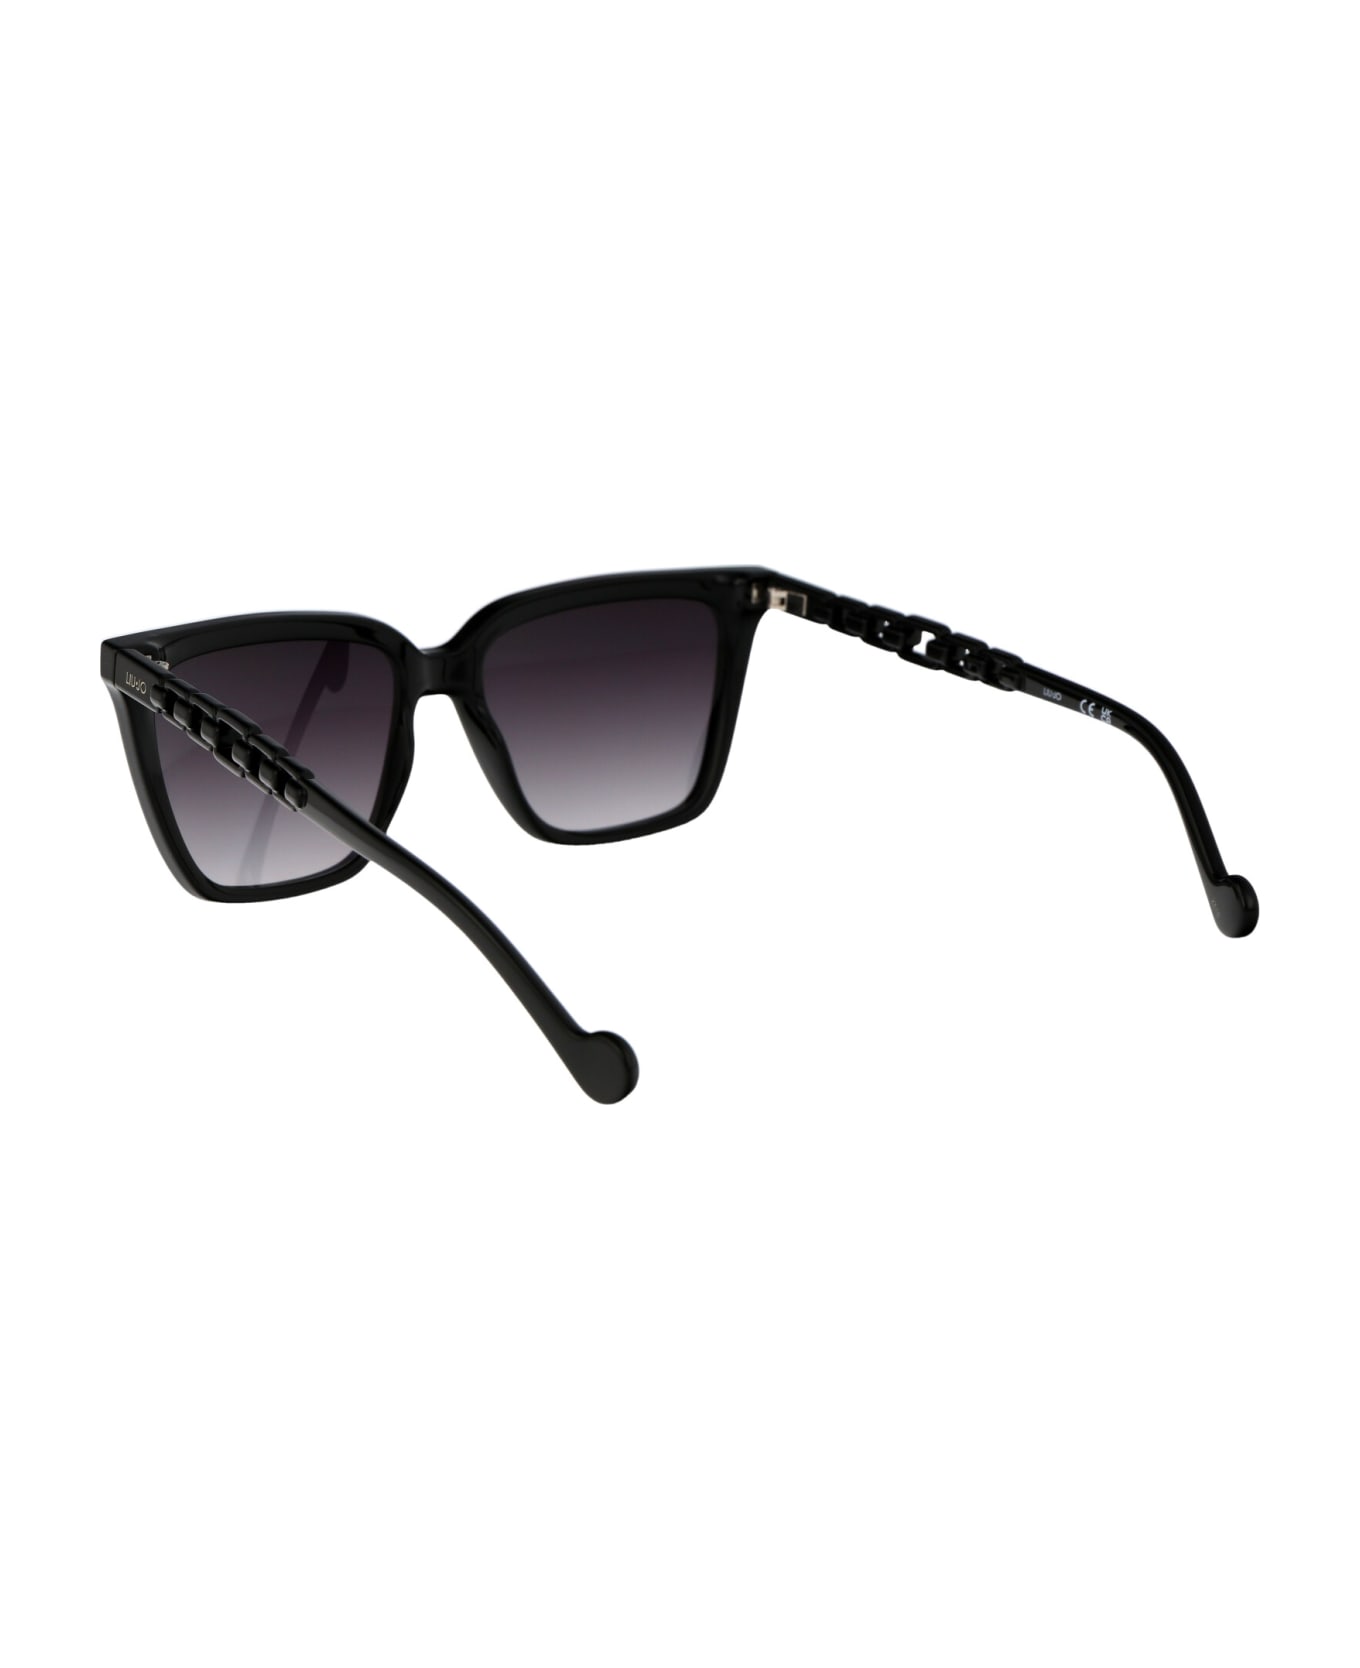 Liu-Jo Lj780s Sunglasses - 001 BLACK